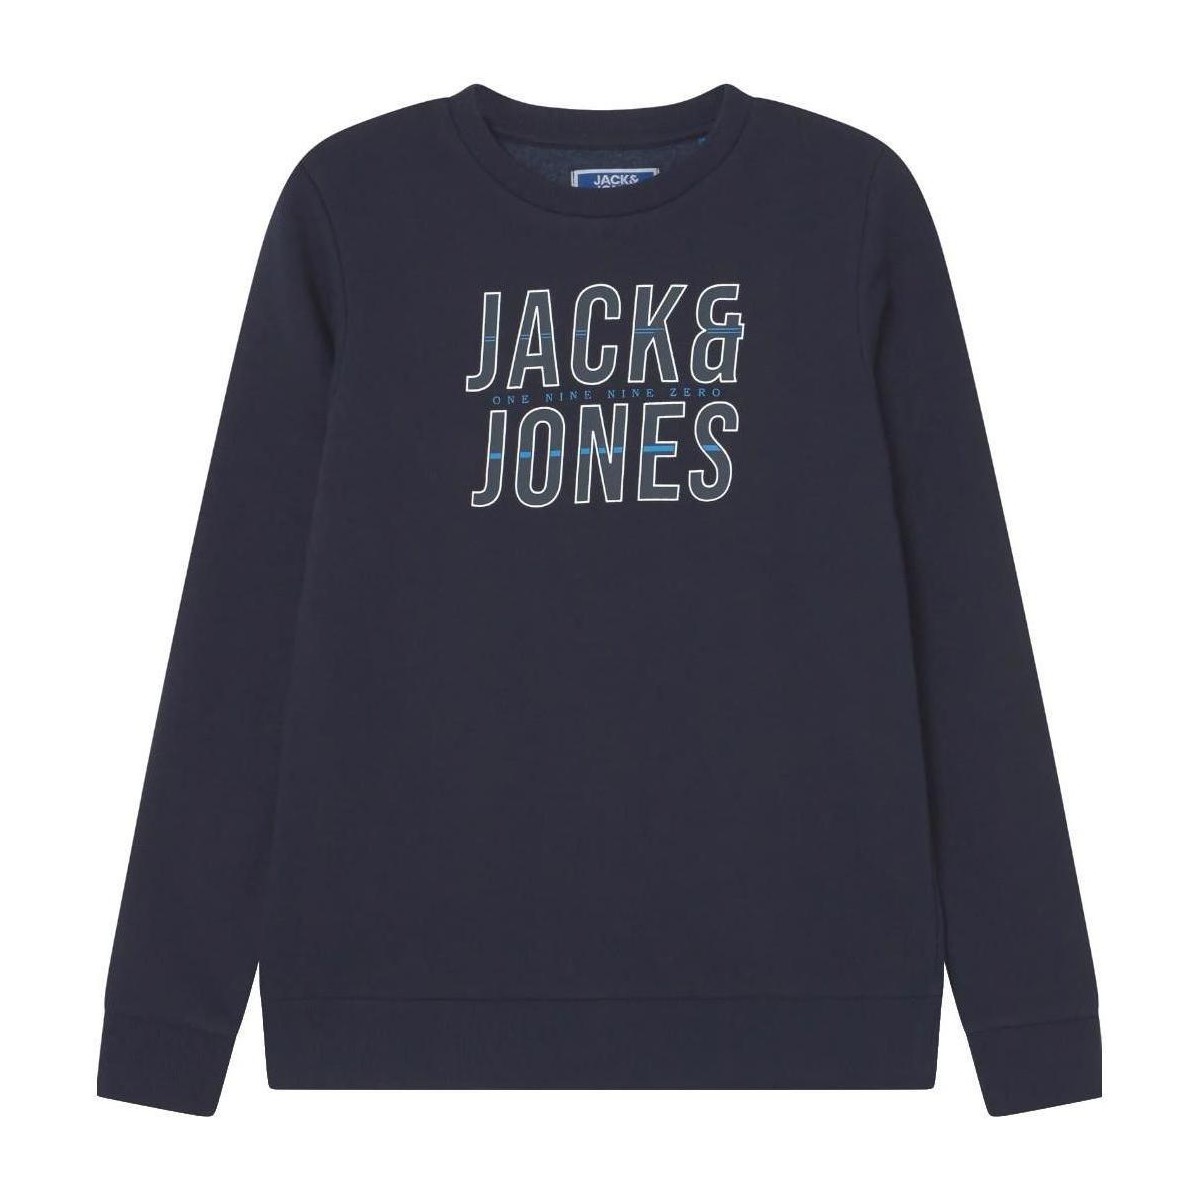 textil Pojkar Sweatshirts Jack & Jones  Blå